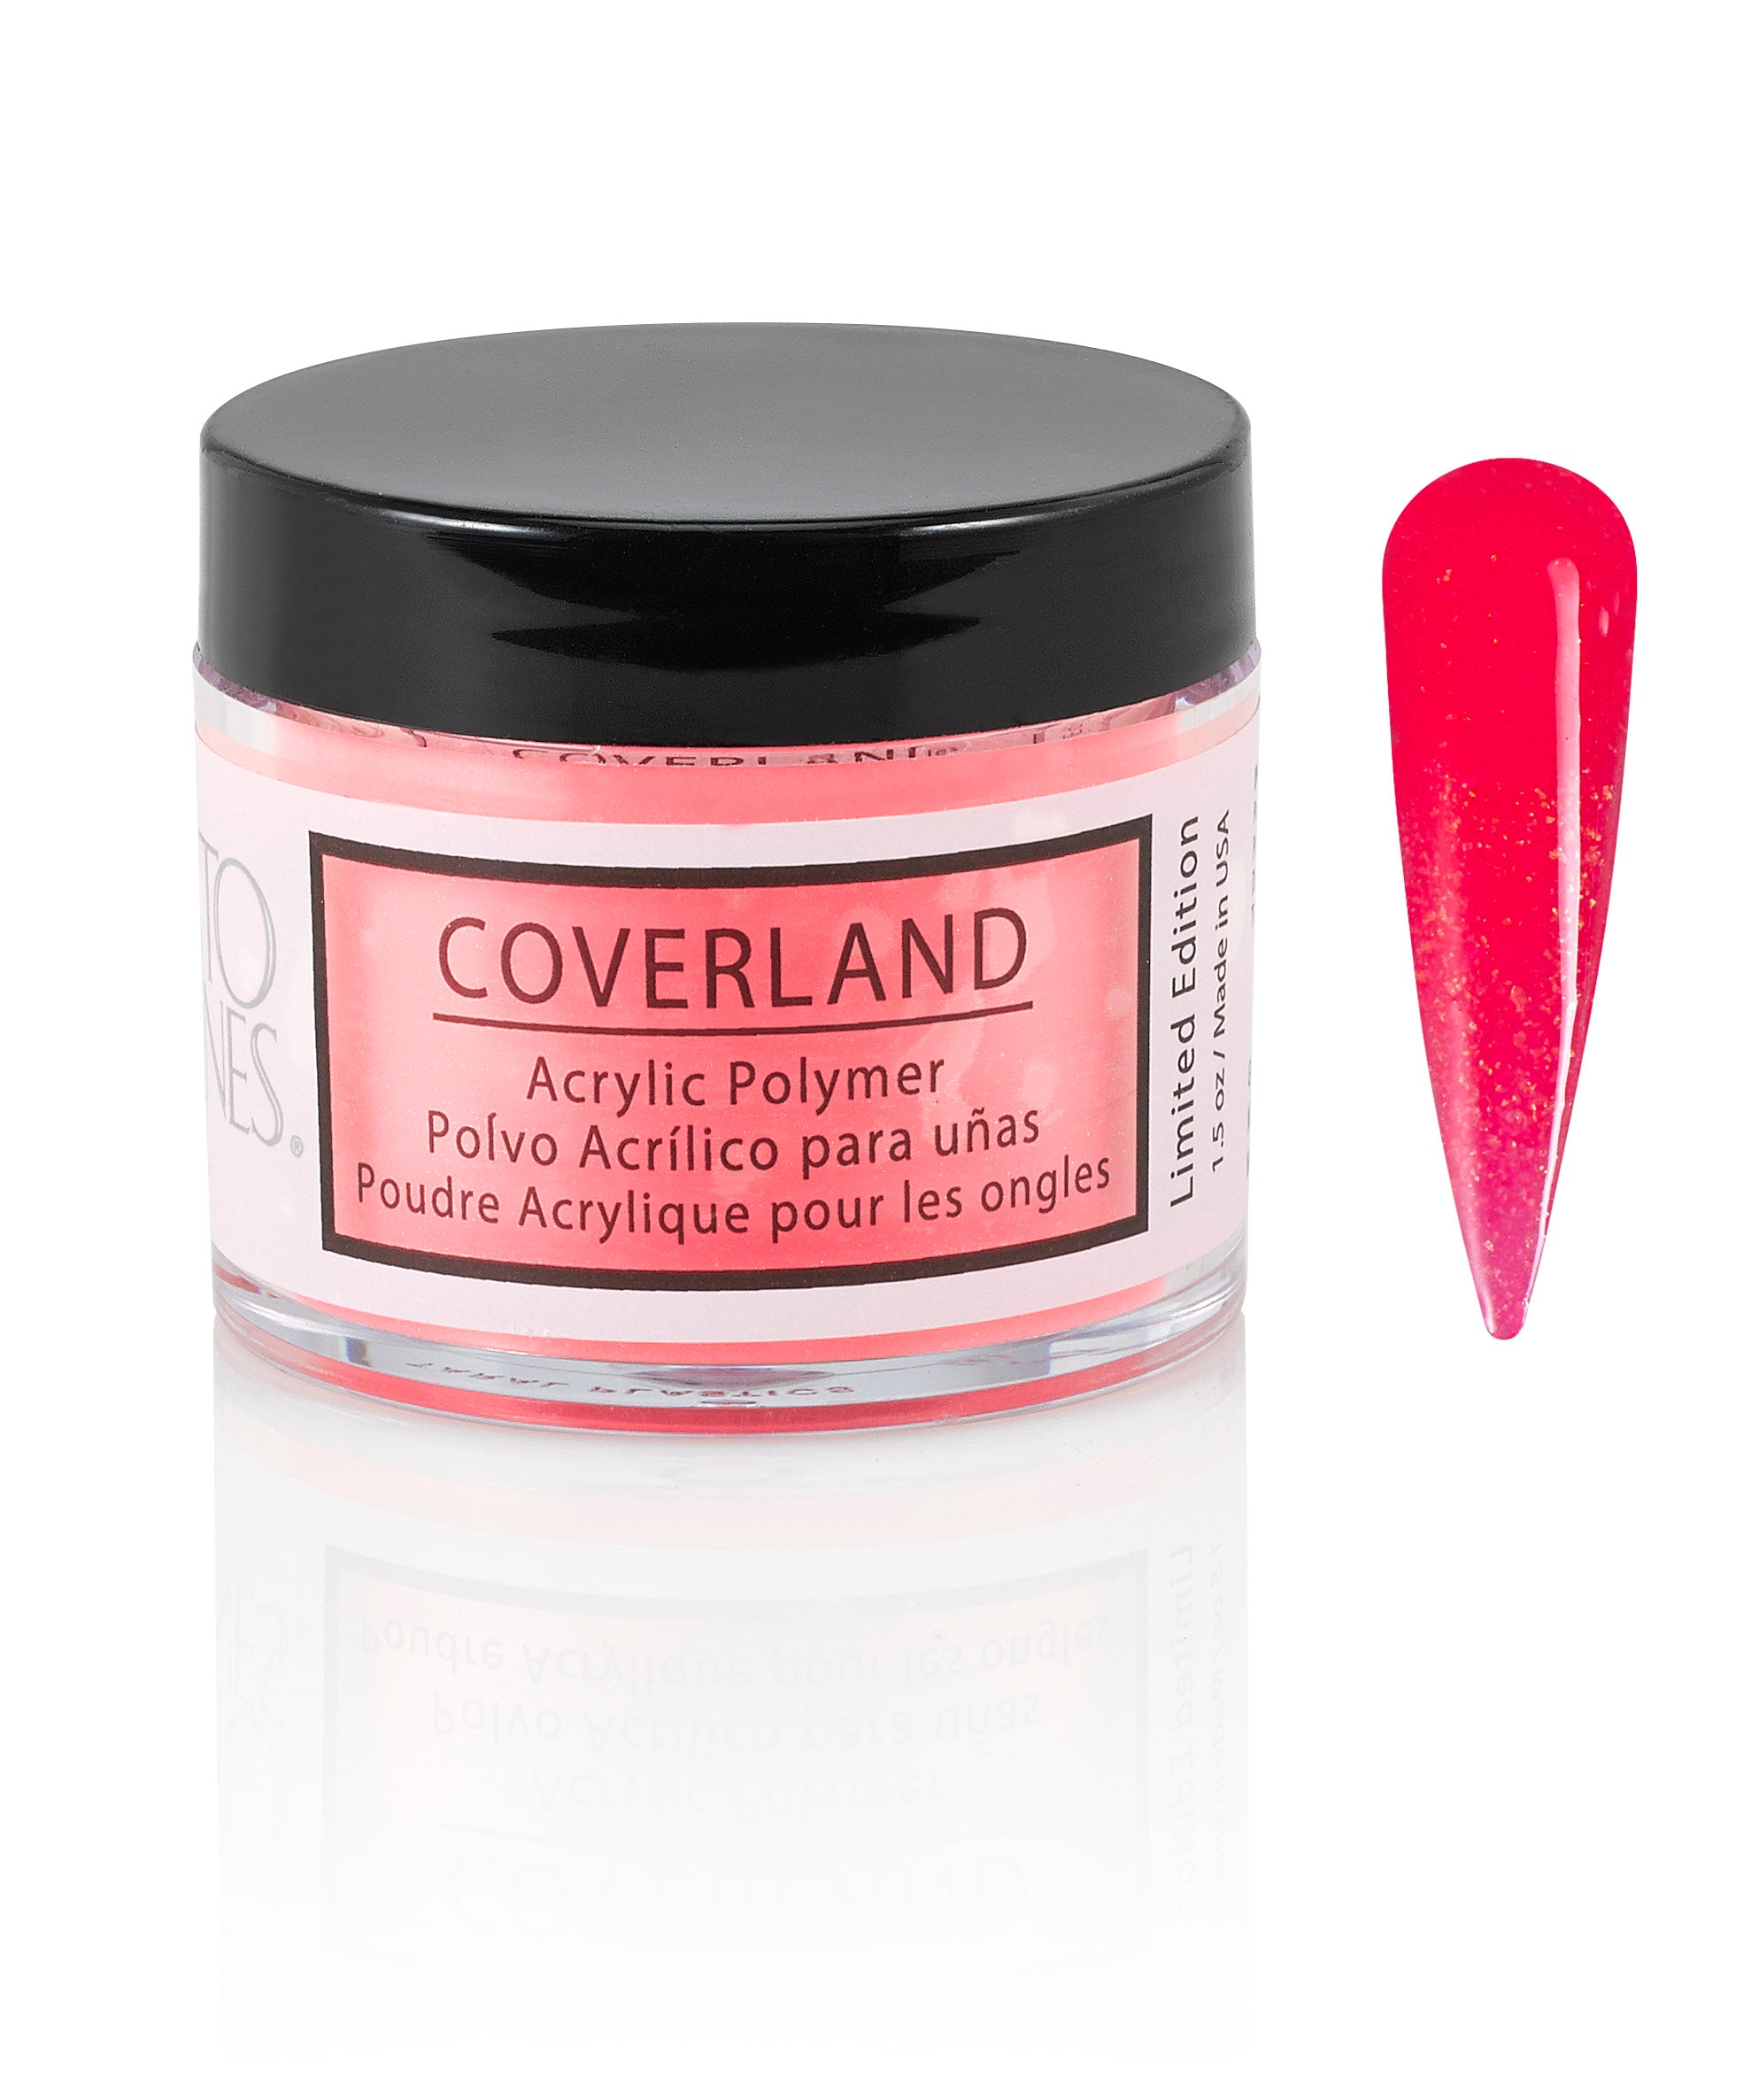 Coverland Acrylic Powder - Millennial Pink 1.5 OZ - Limited Edition